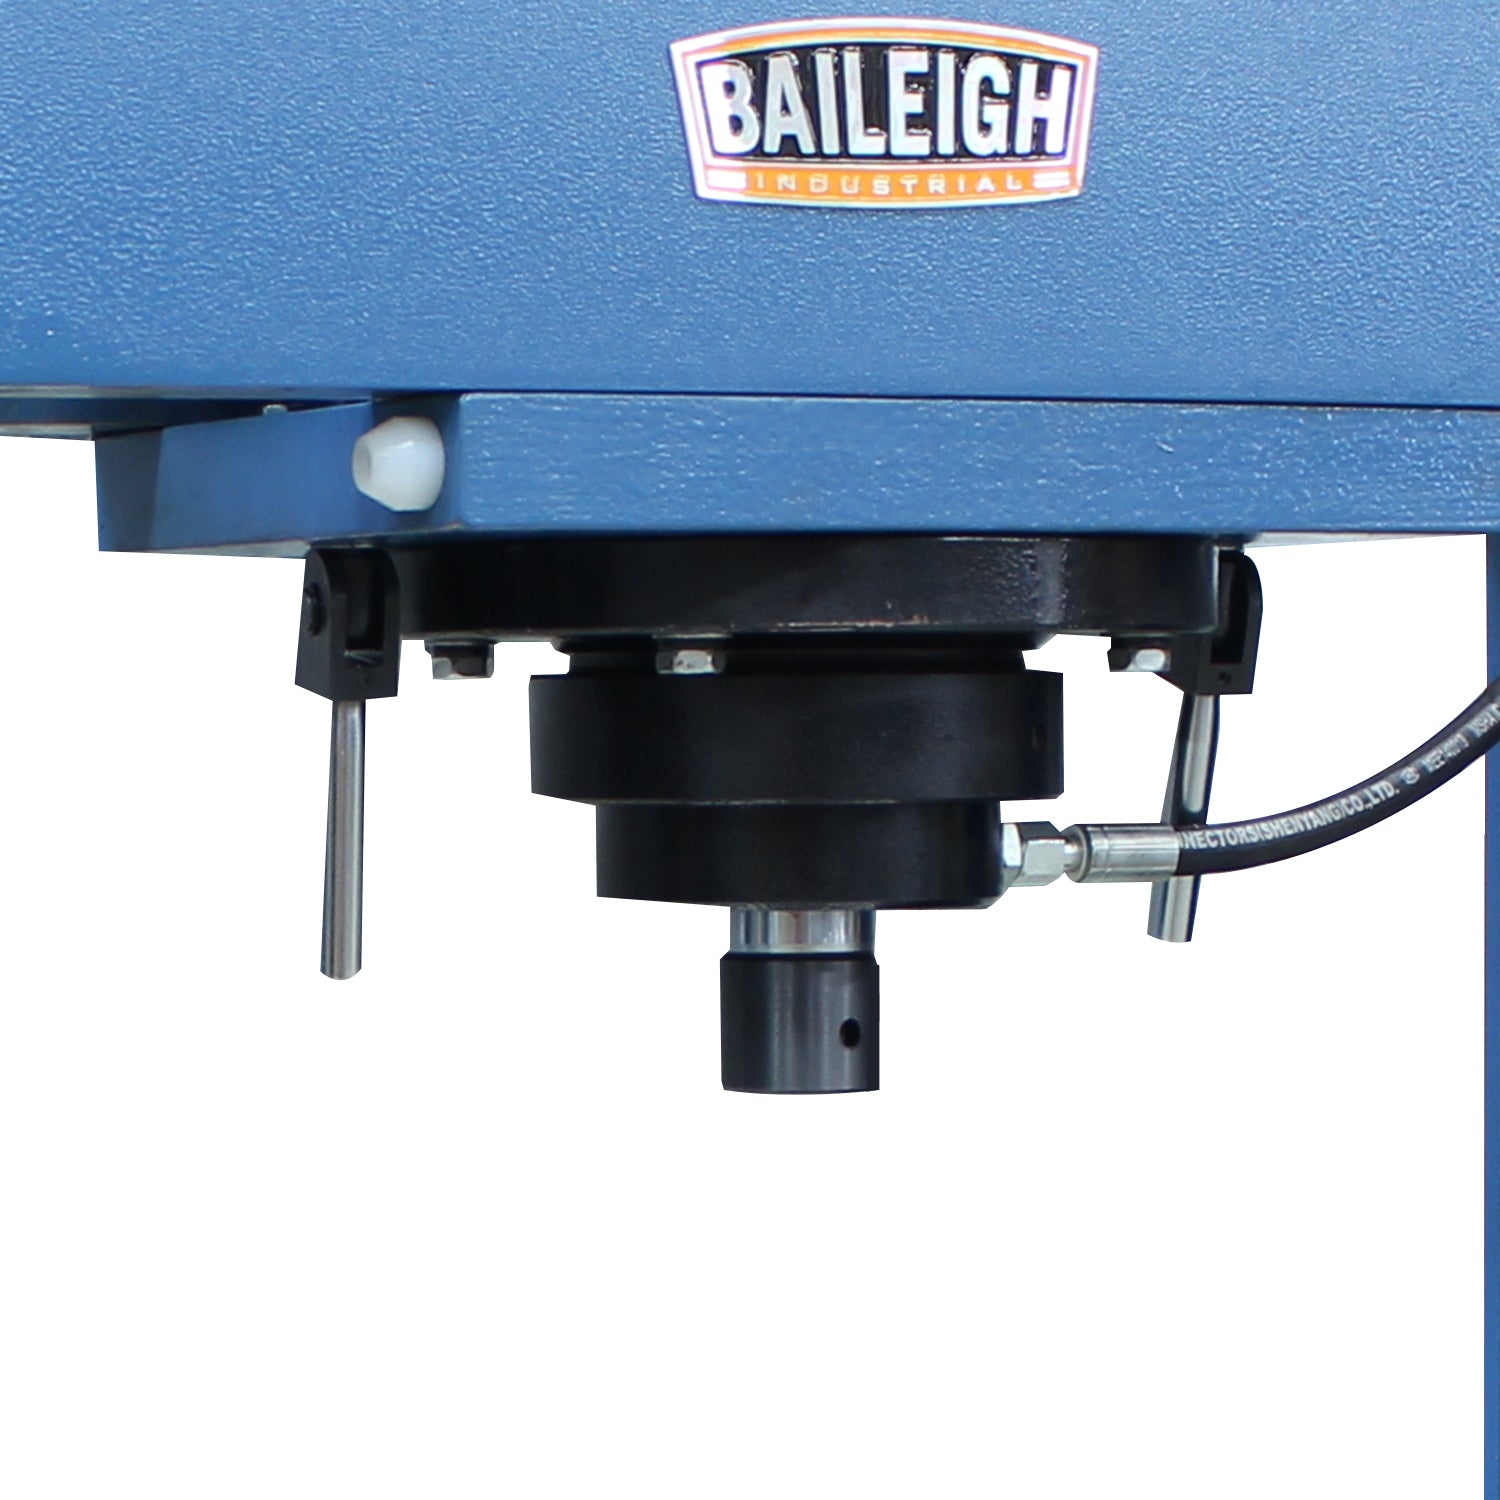 Baileigh HSP-30M-C 220V 1 Phase 30/15 Ton Hydraulic H-Frame Press, 9.5" Stroke